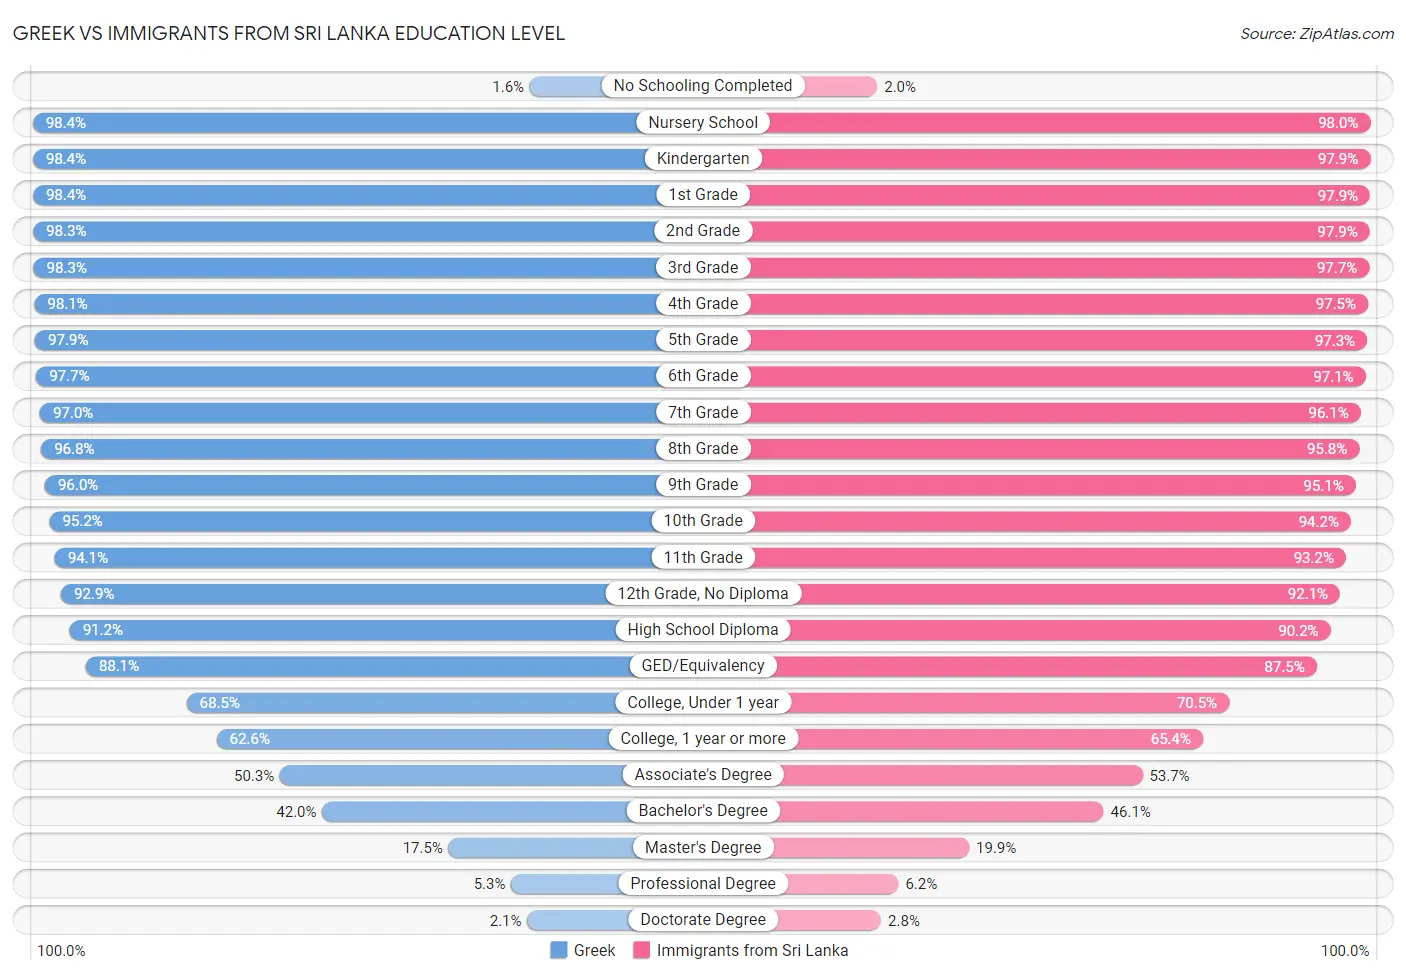 Greek vs Immigrants from Sri Lanka Education Level